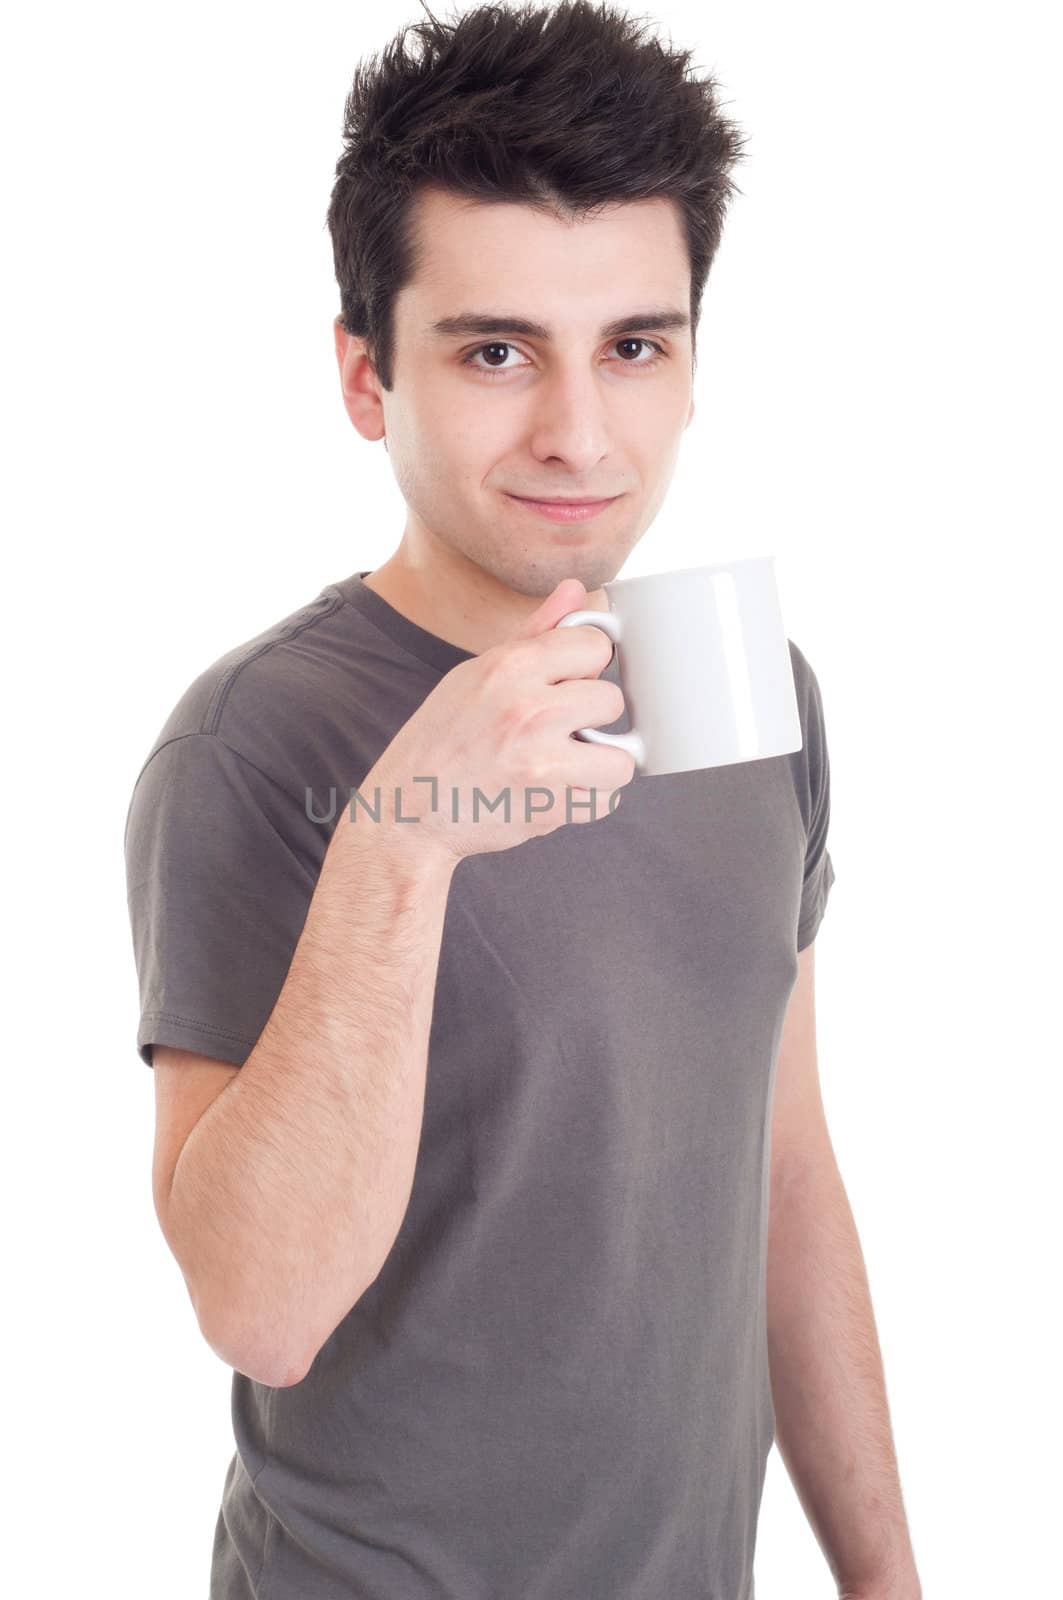 happy casual man holding coffee/tea mug (isolated on white background)